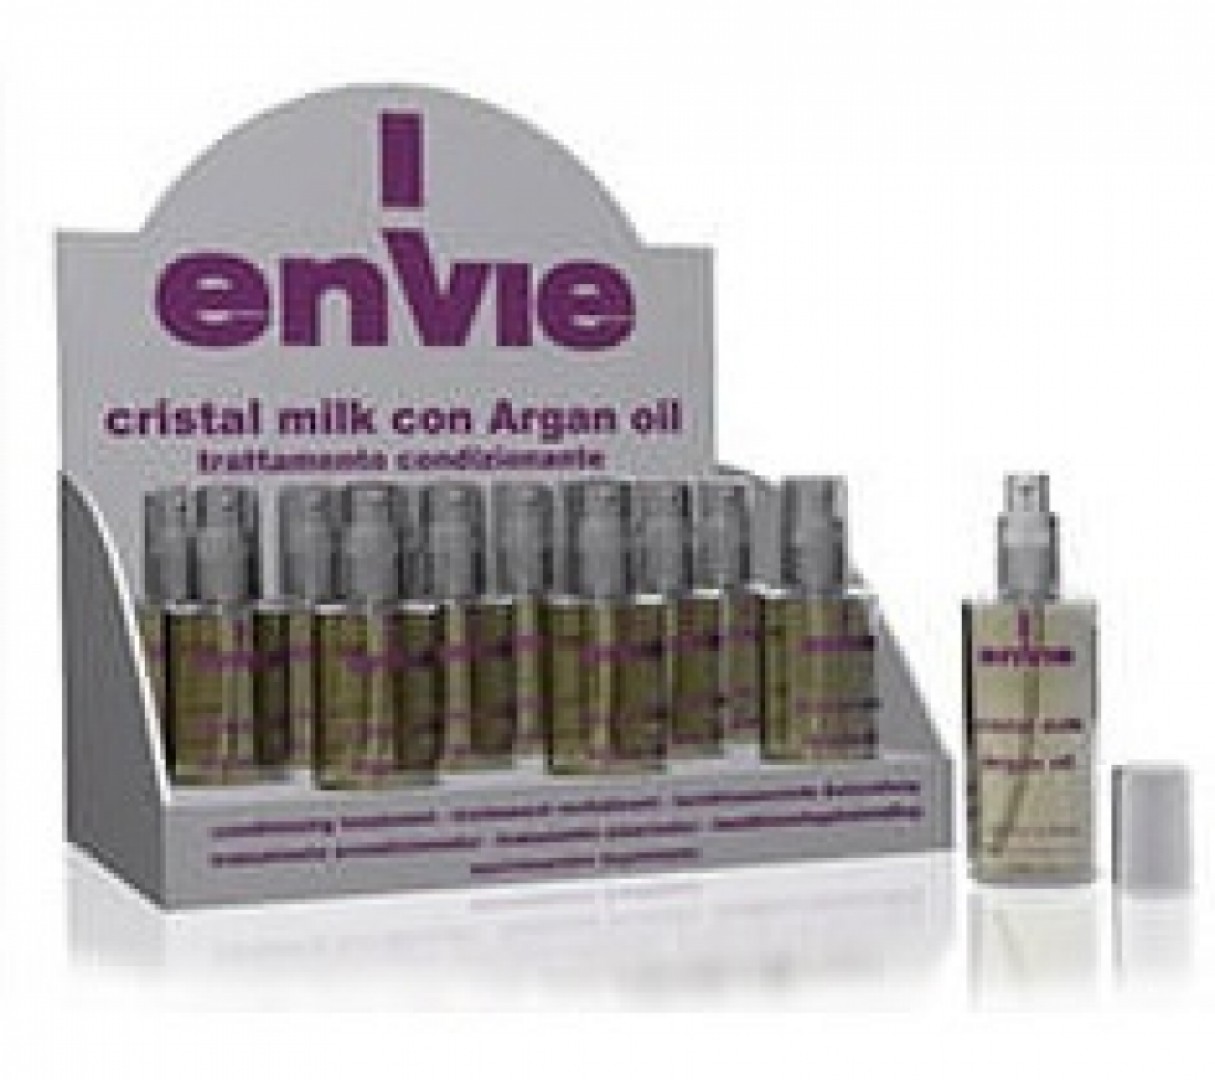 Envie Cristal Milk Argan Oil